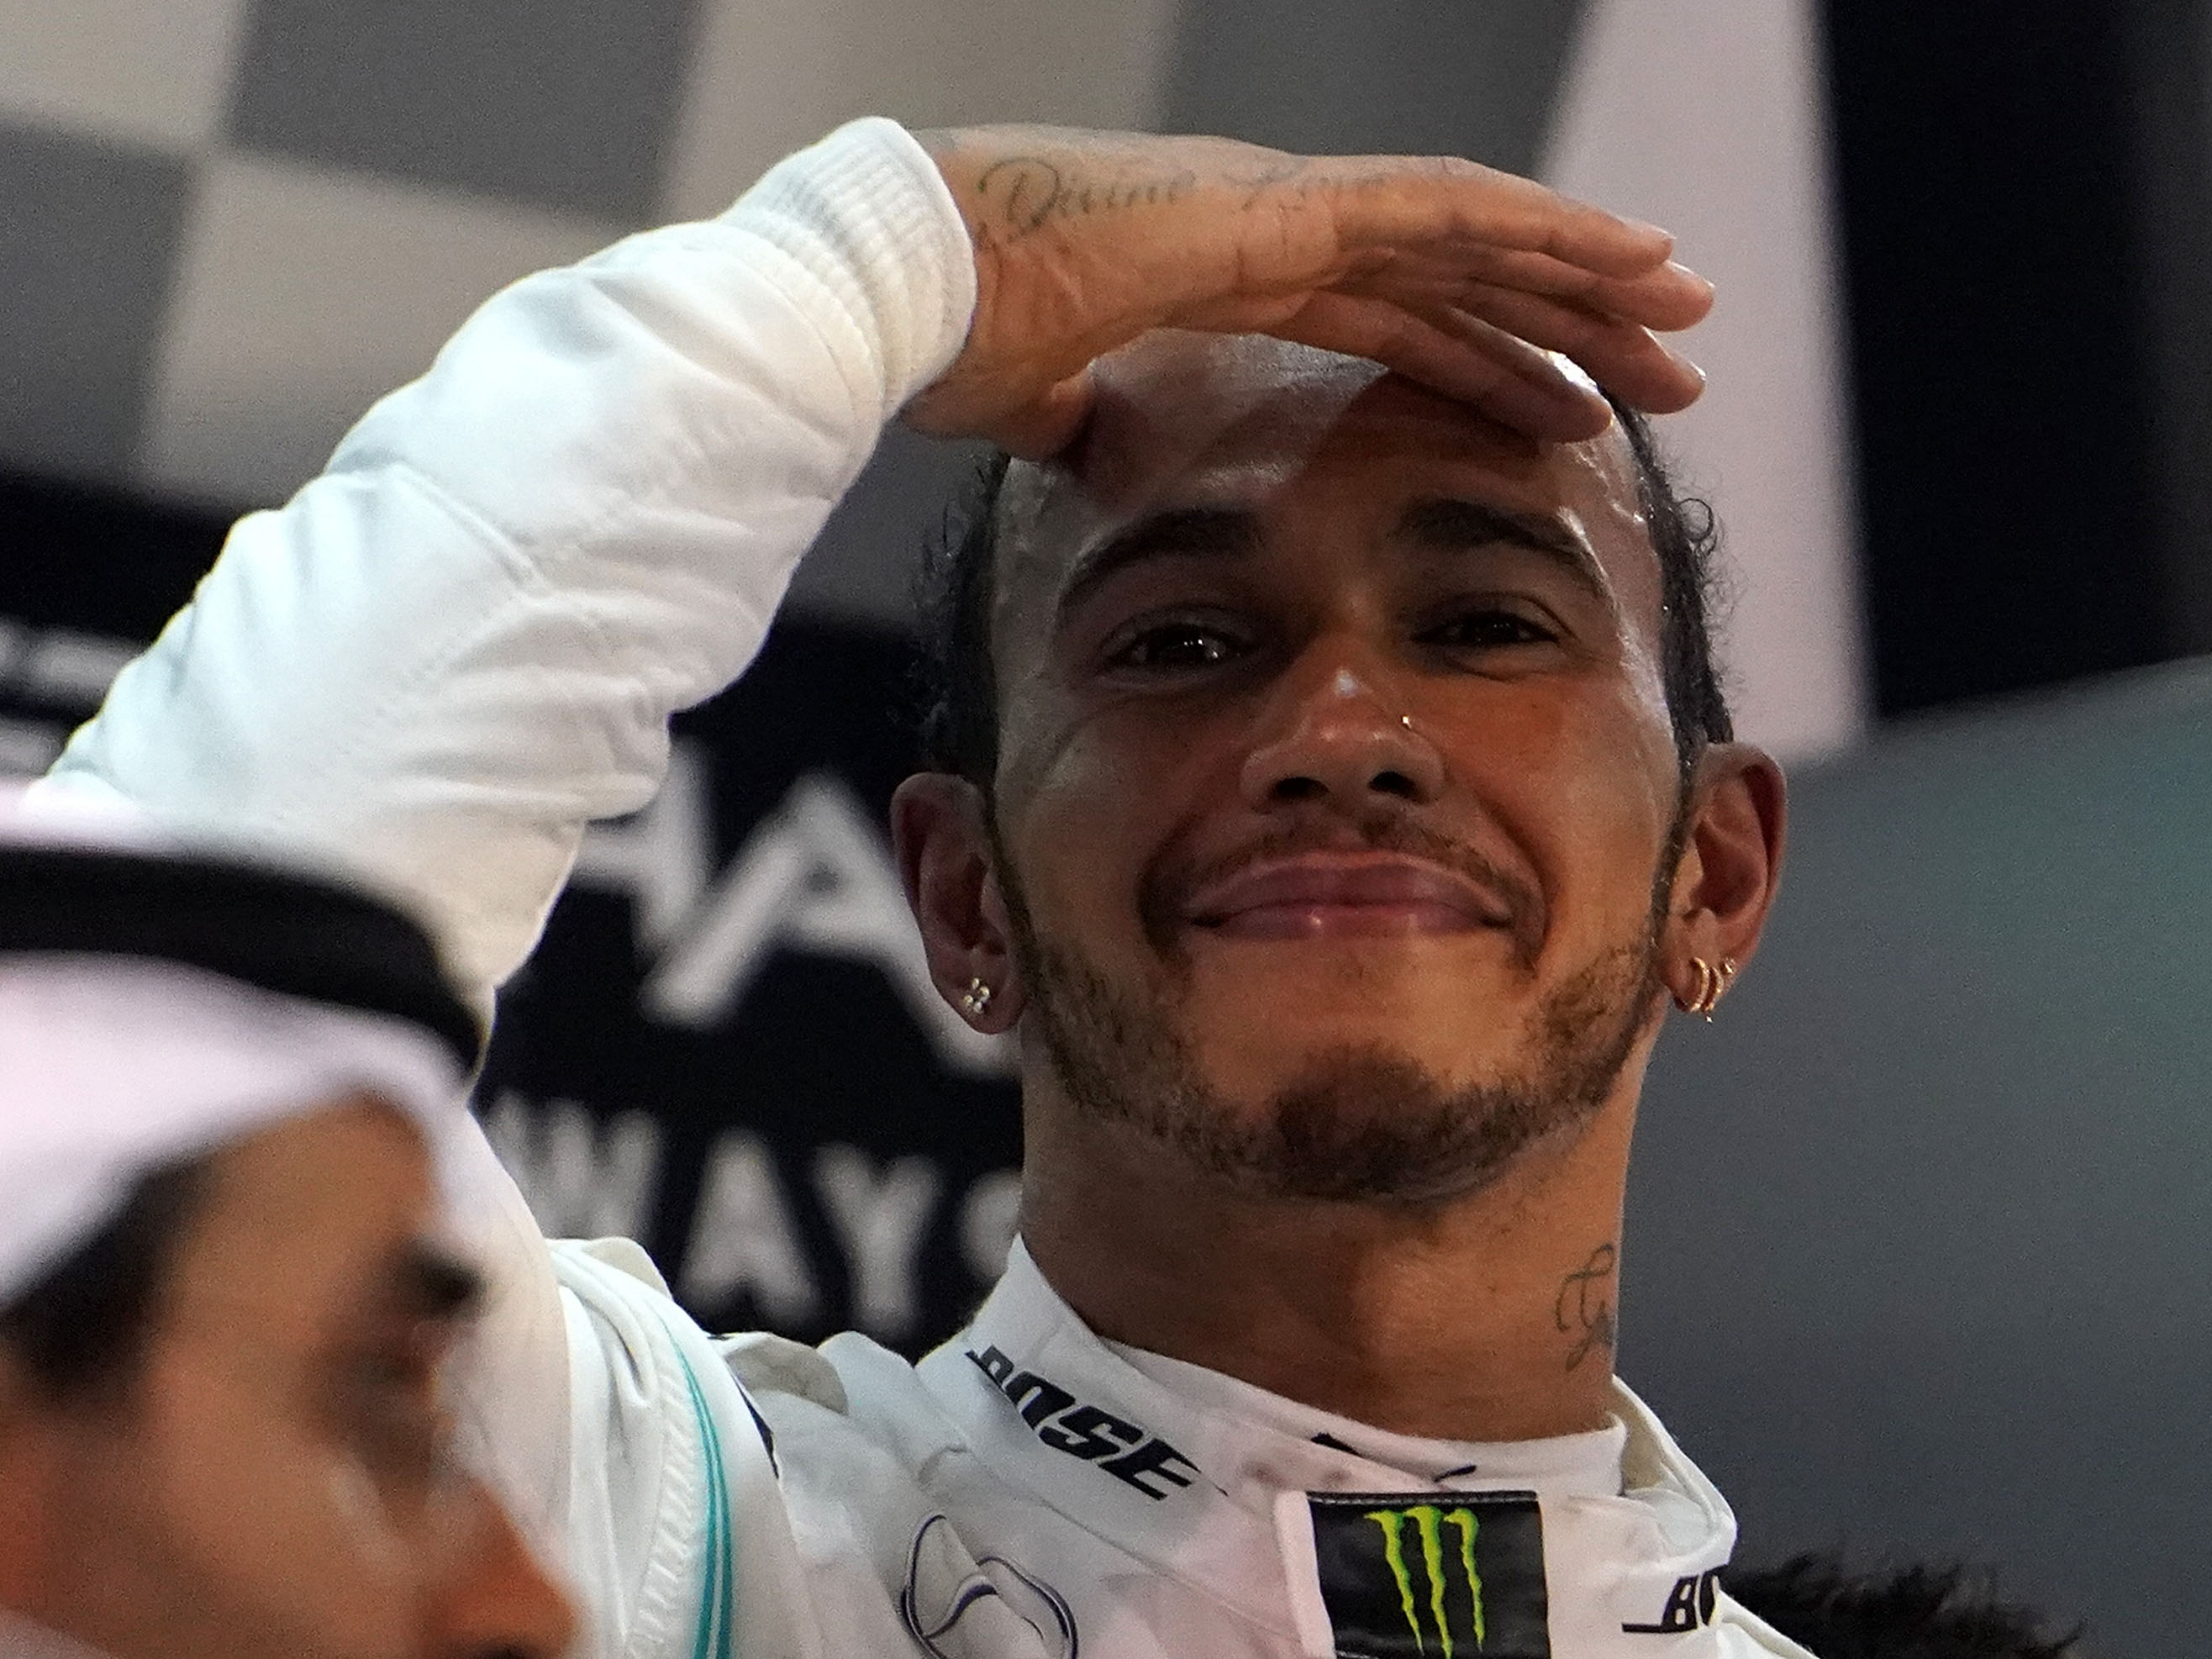 Mercedes driver Lewis Hamilton tops Abu Dhabi Grand Prix driver ratings